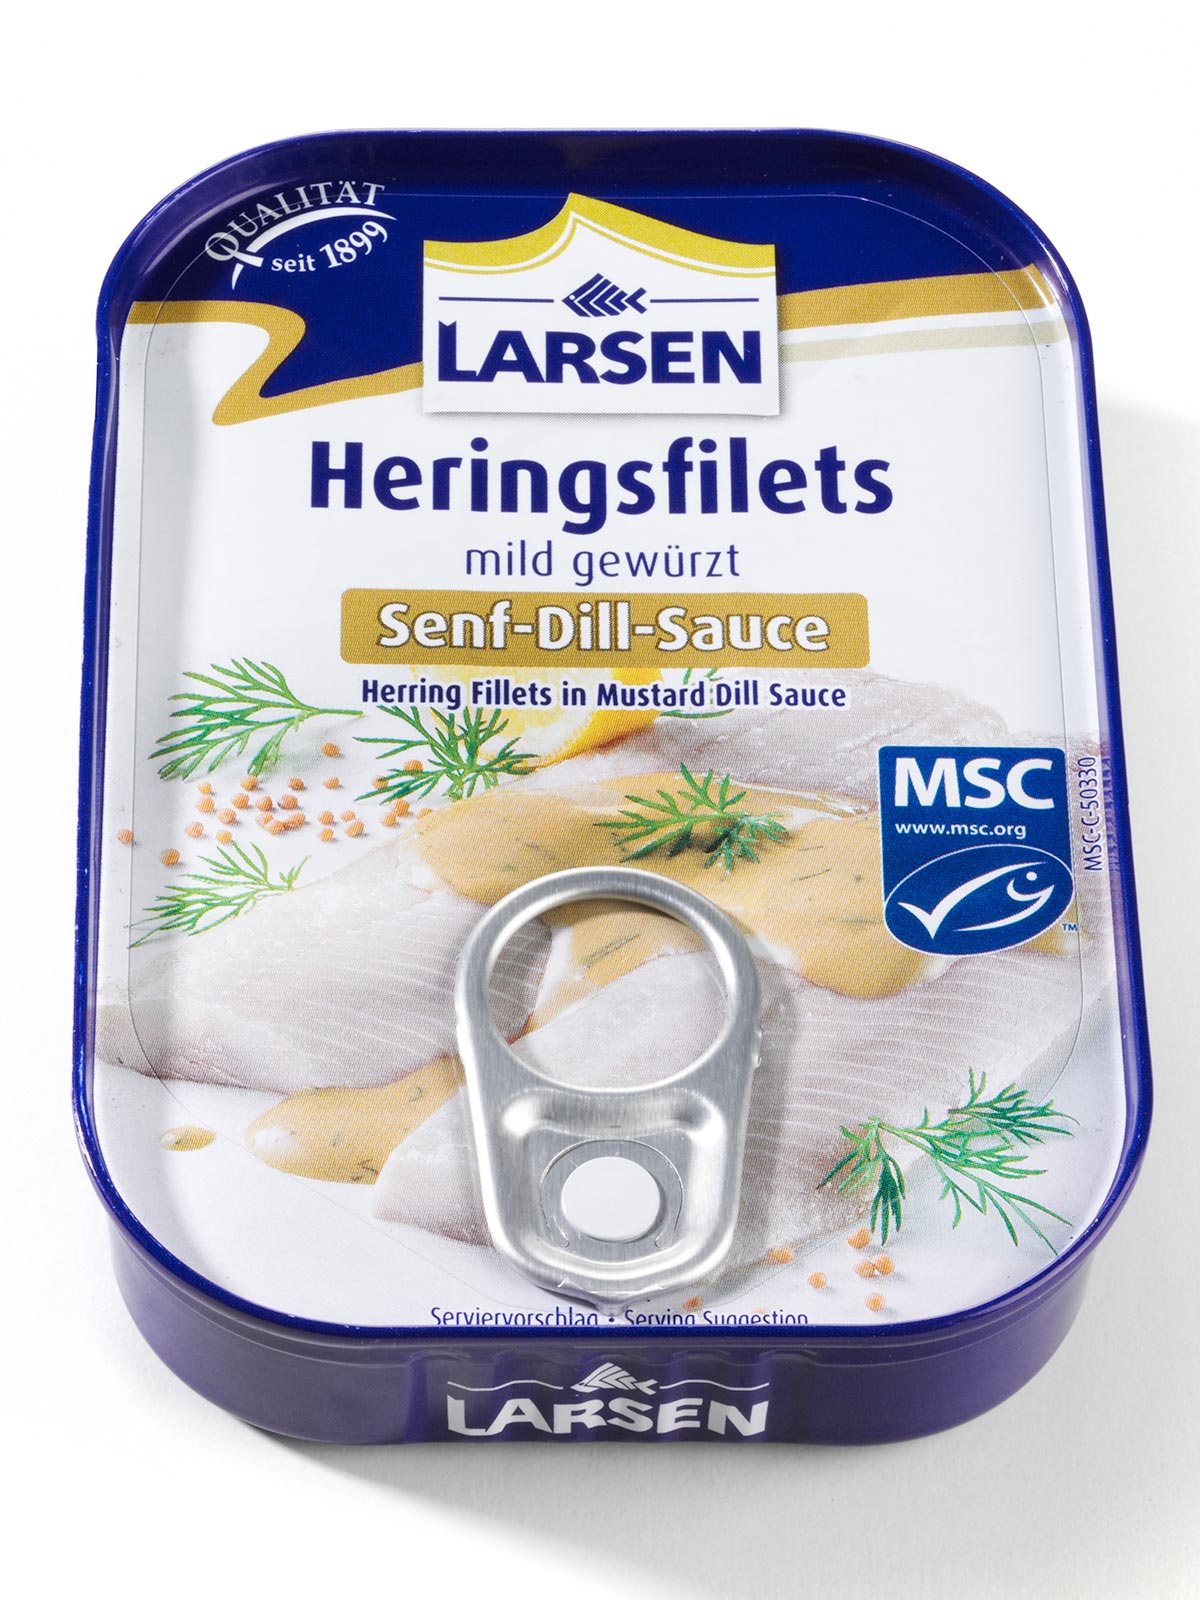 Heringsfilets in Senf-Dill-Sauce